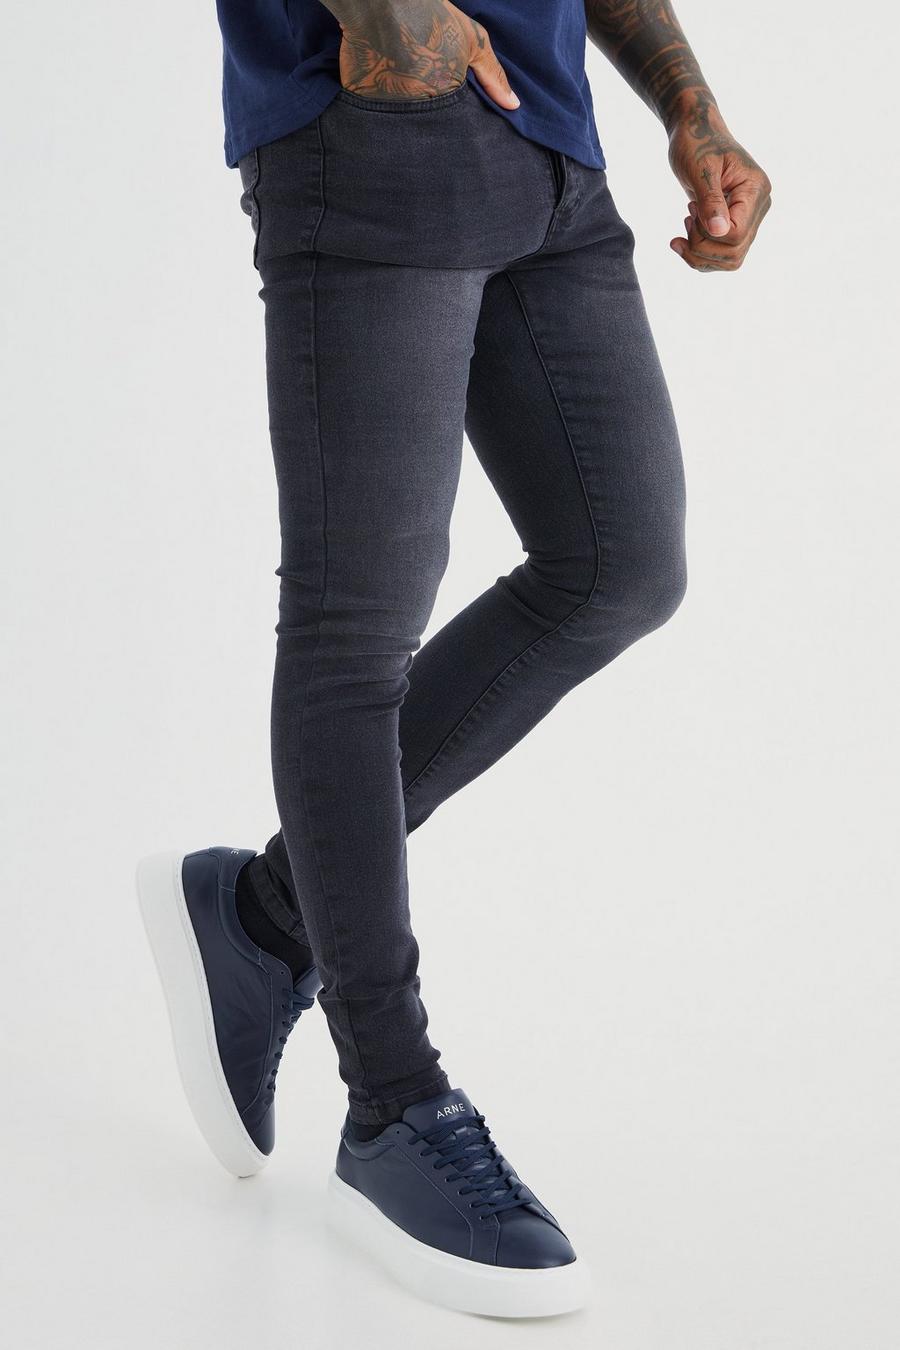 Jeans Super Skinny Fit in Stretch, Washed black